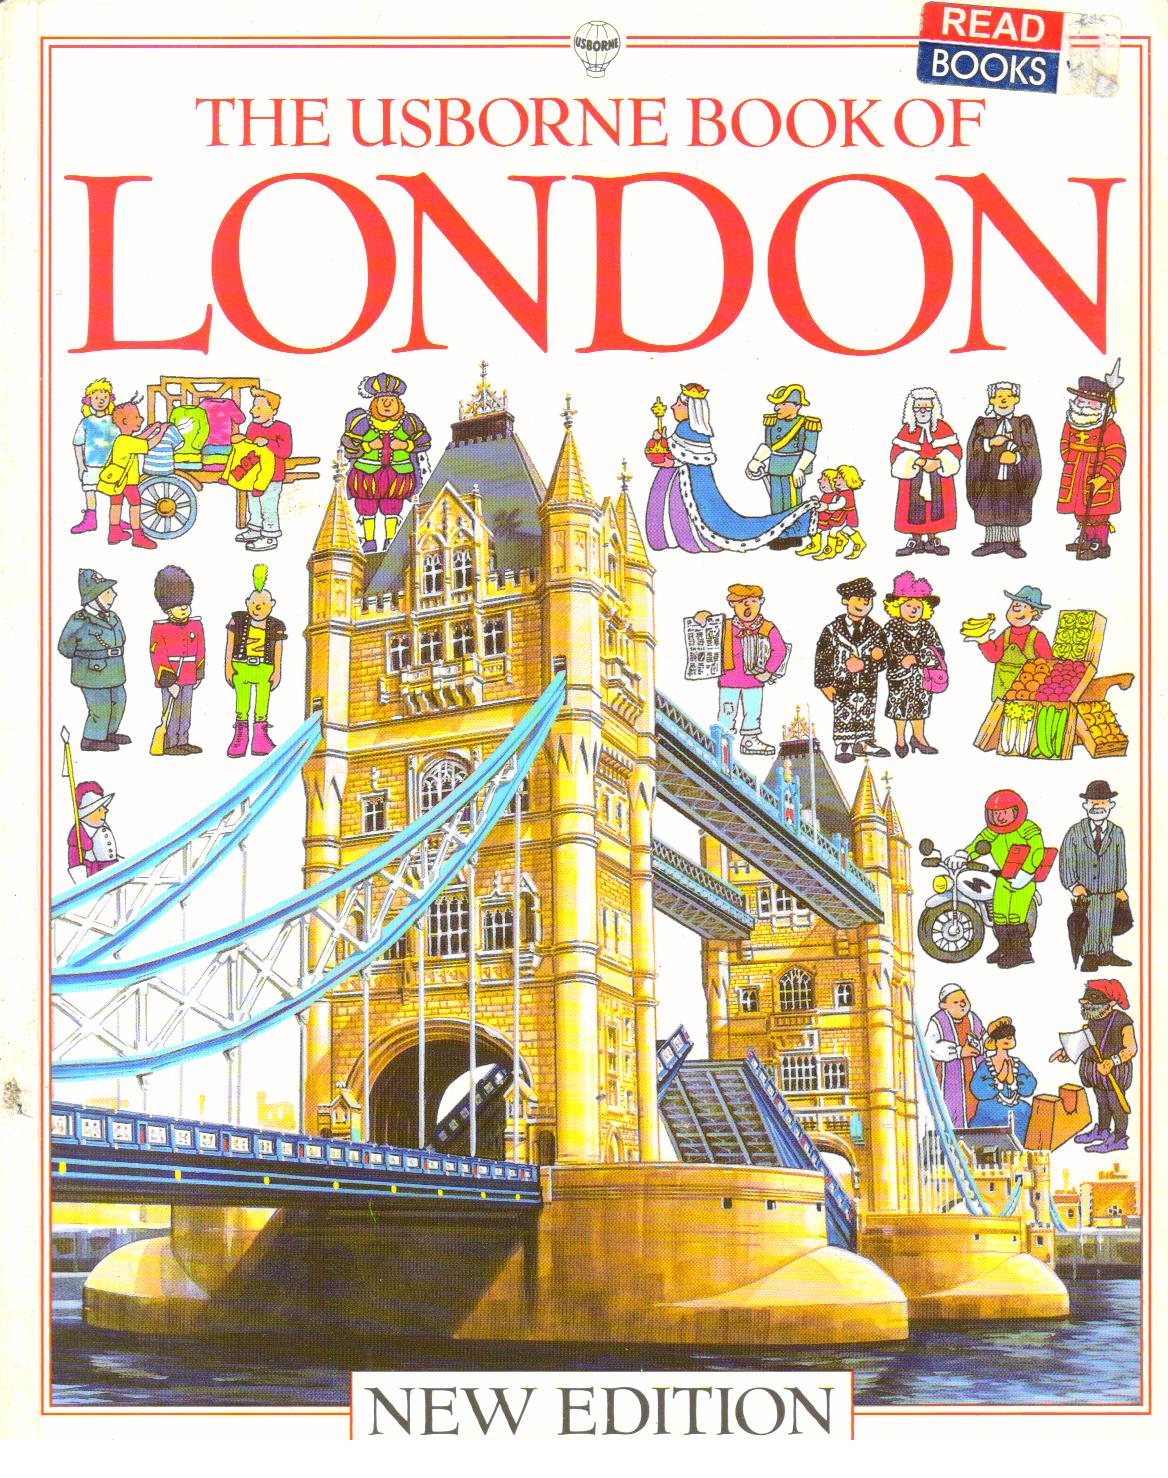 The USBorne book of London.